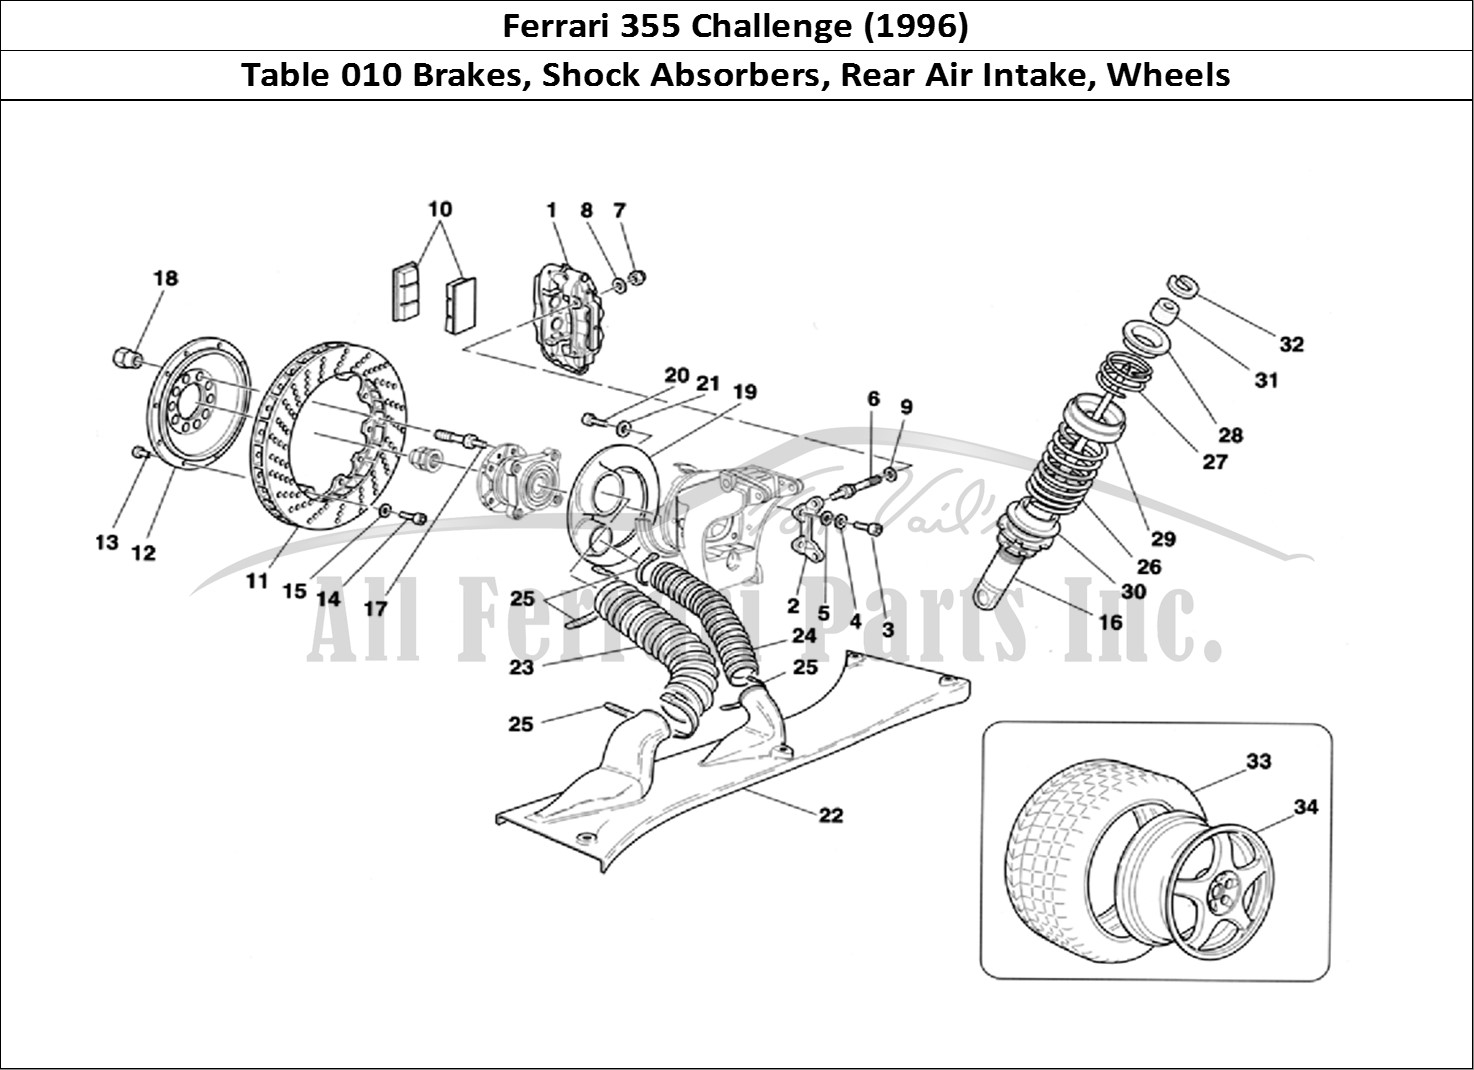 Ferrari Parts Ferrari 355 Challenge (1996) Page 010 Brakes - Shock Absorbers